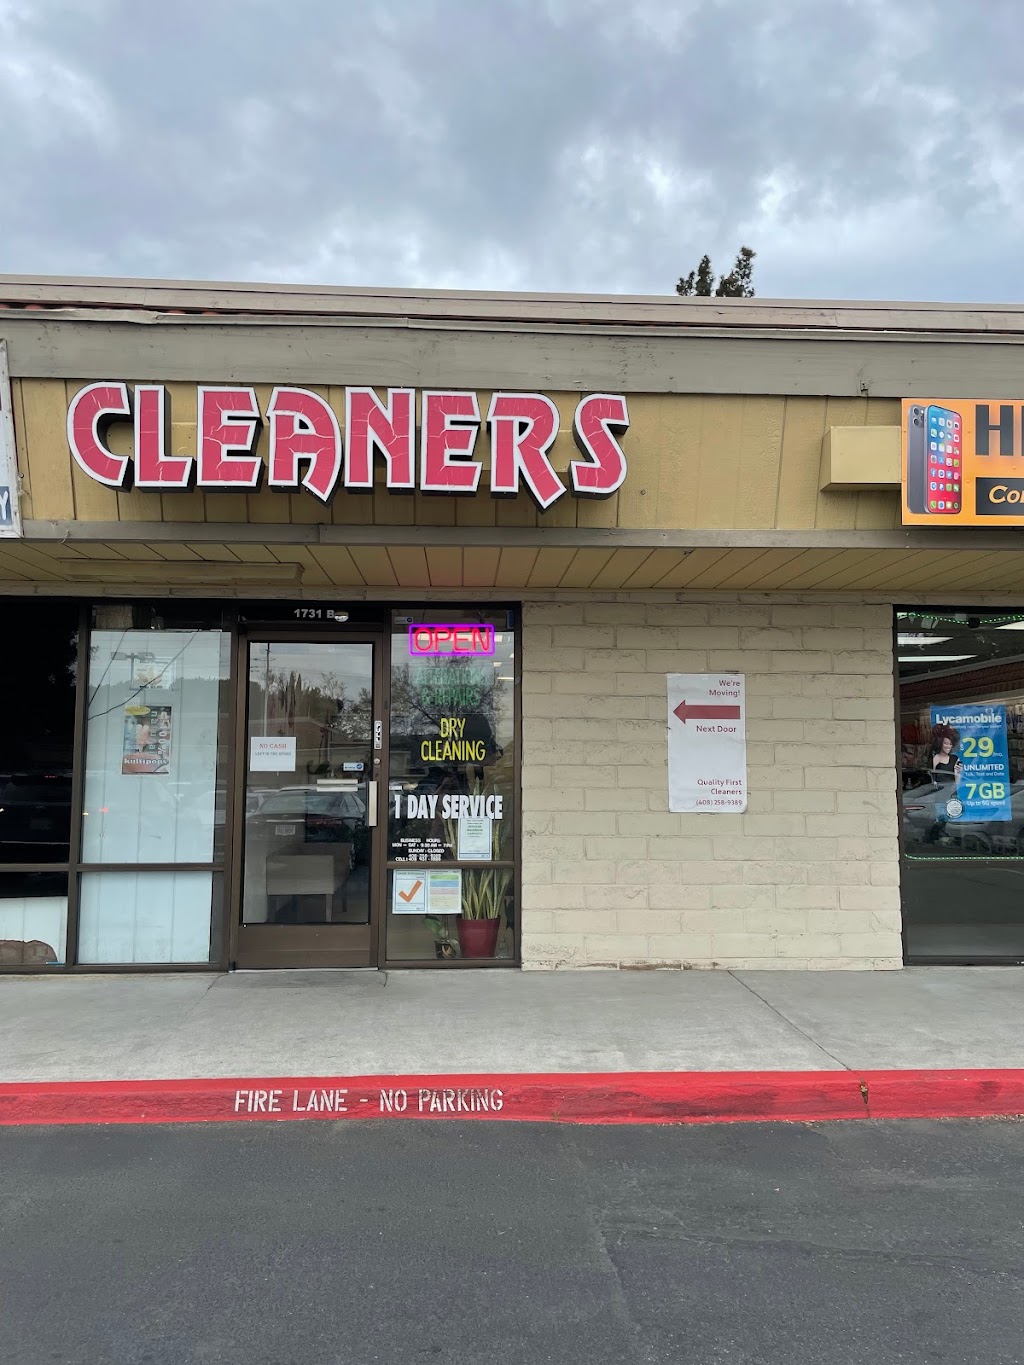 Quality First Cleaners | 1731 Berryessa Rd B, San Jose, CA 95133, USA | Phone: (408) 258-9389